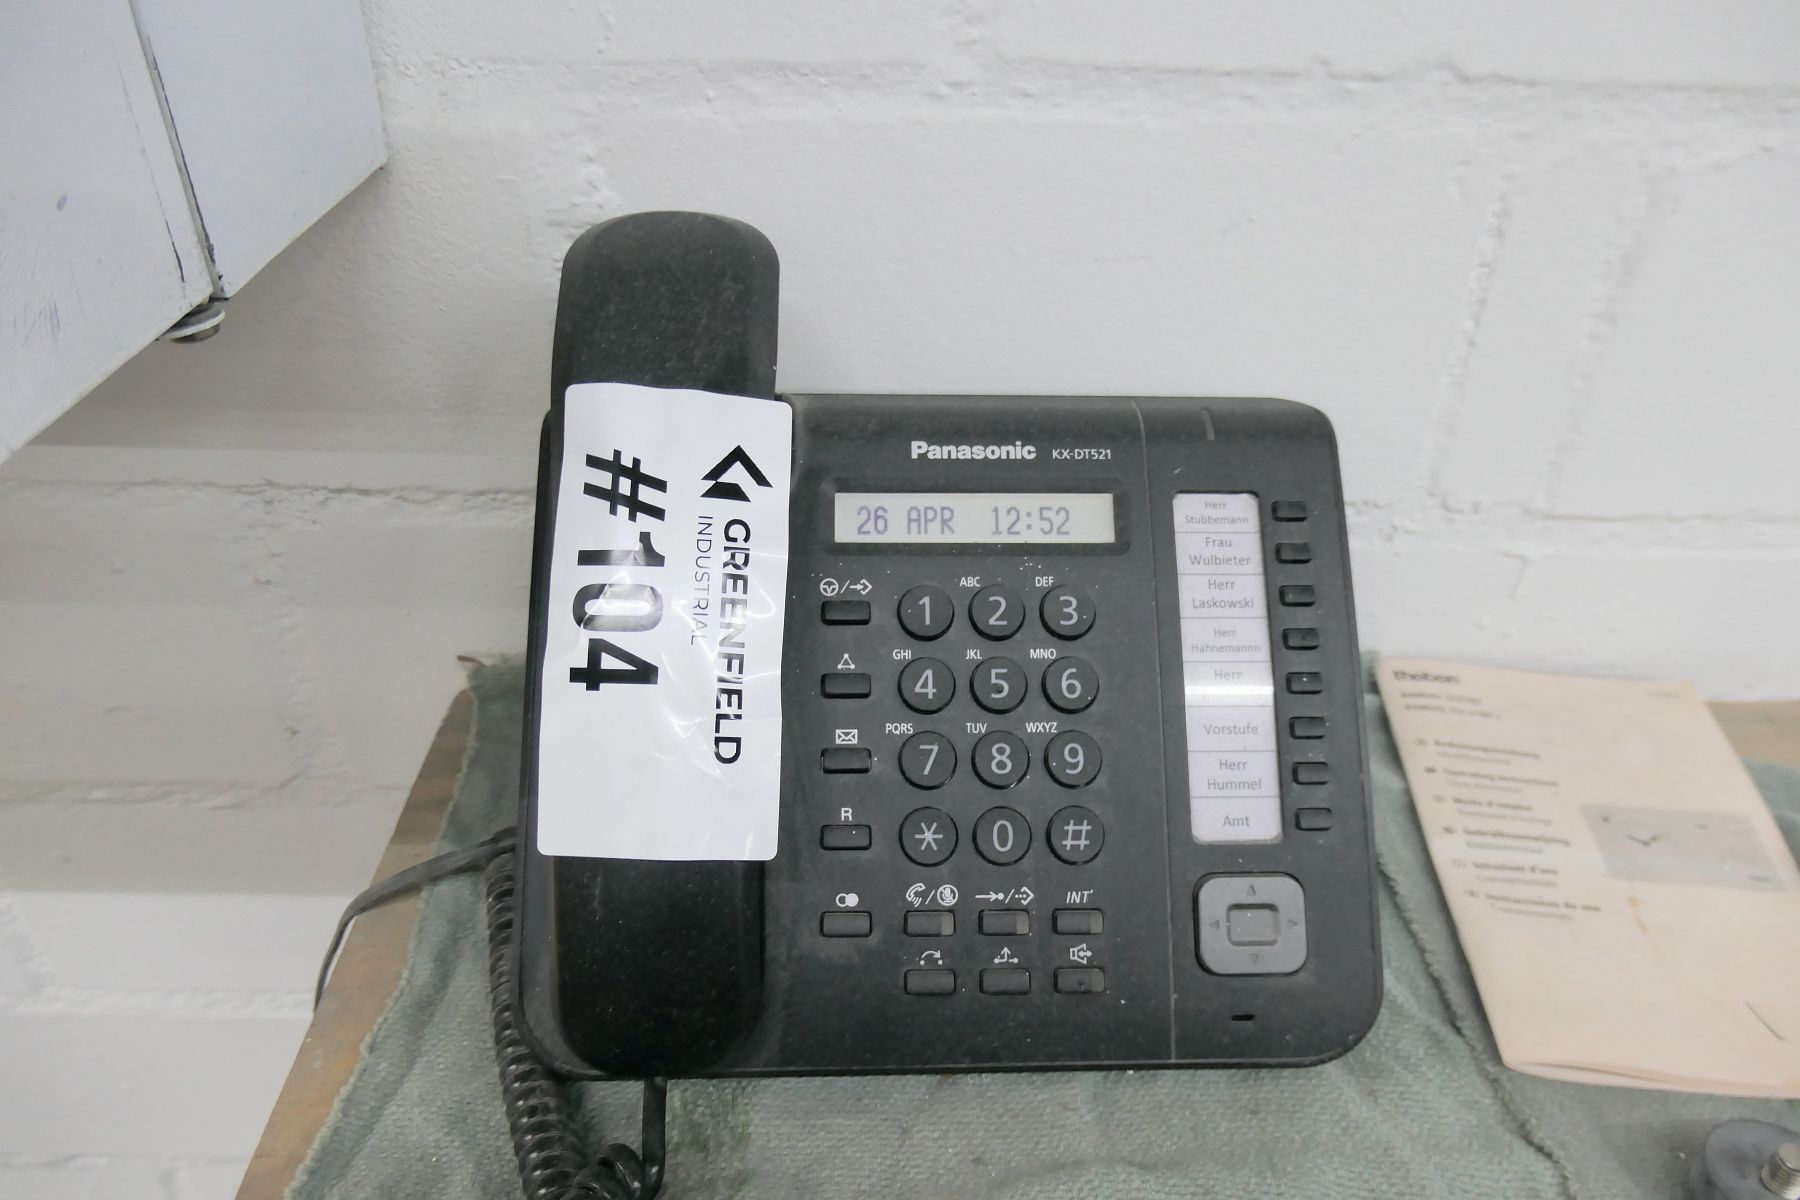 Tischtelefon Panasonic KX-DT521